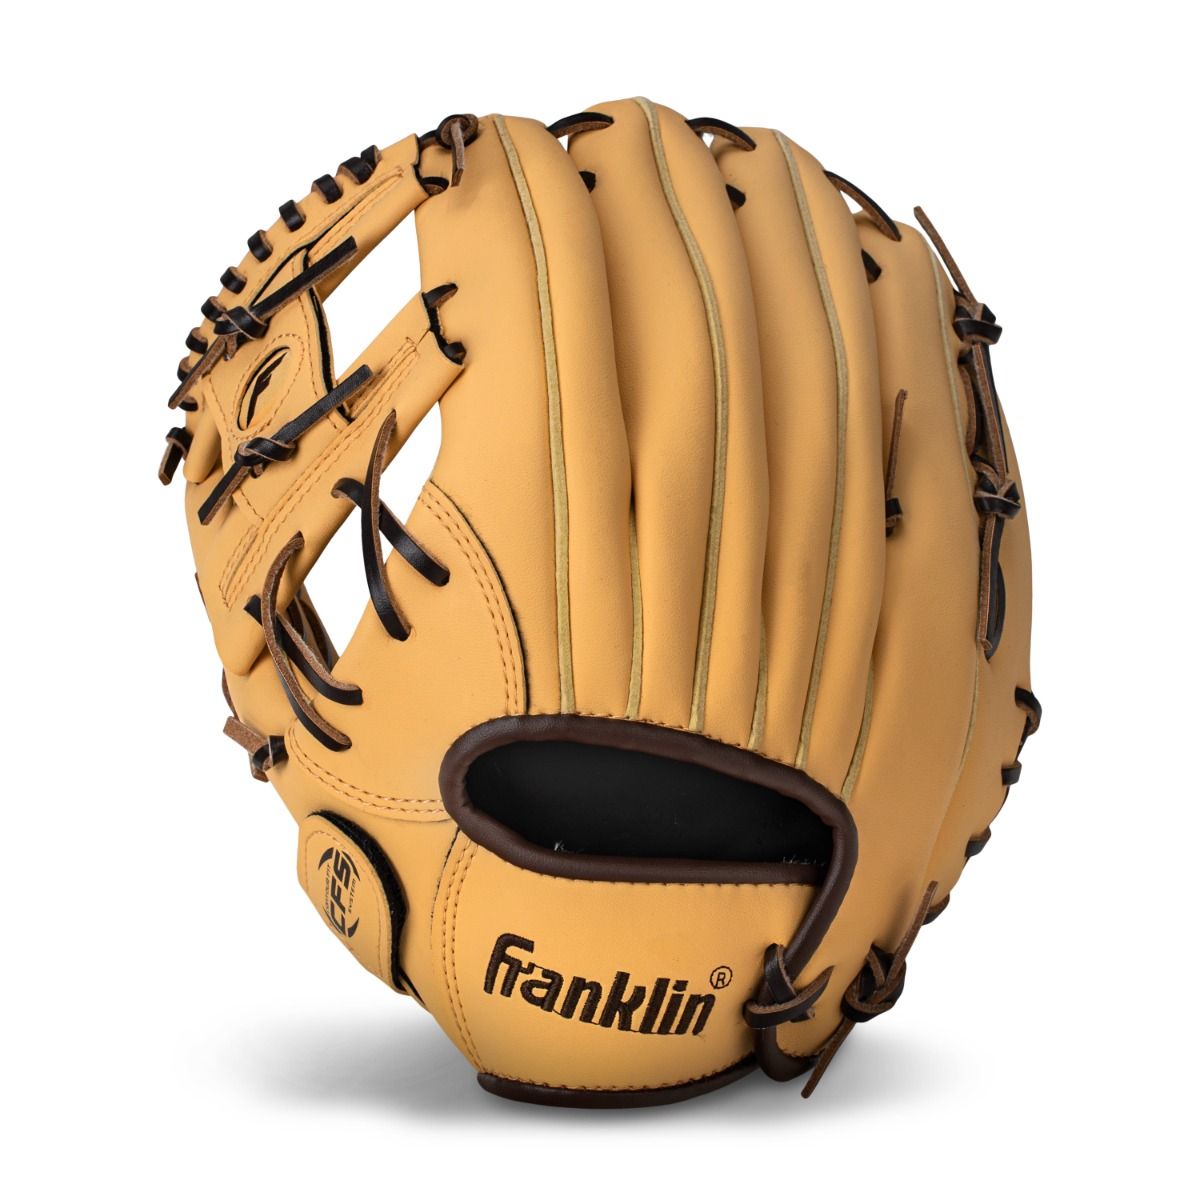 Franklin Field Master Softball Glove - Camel